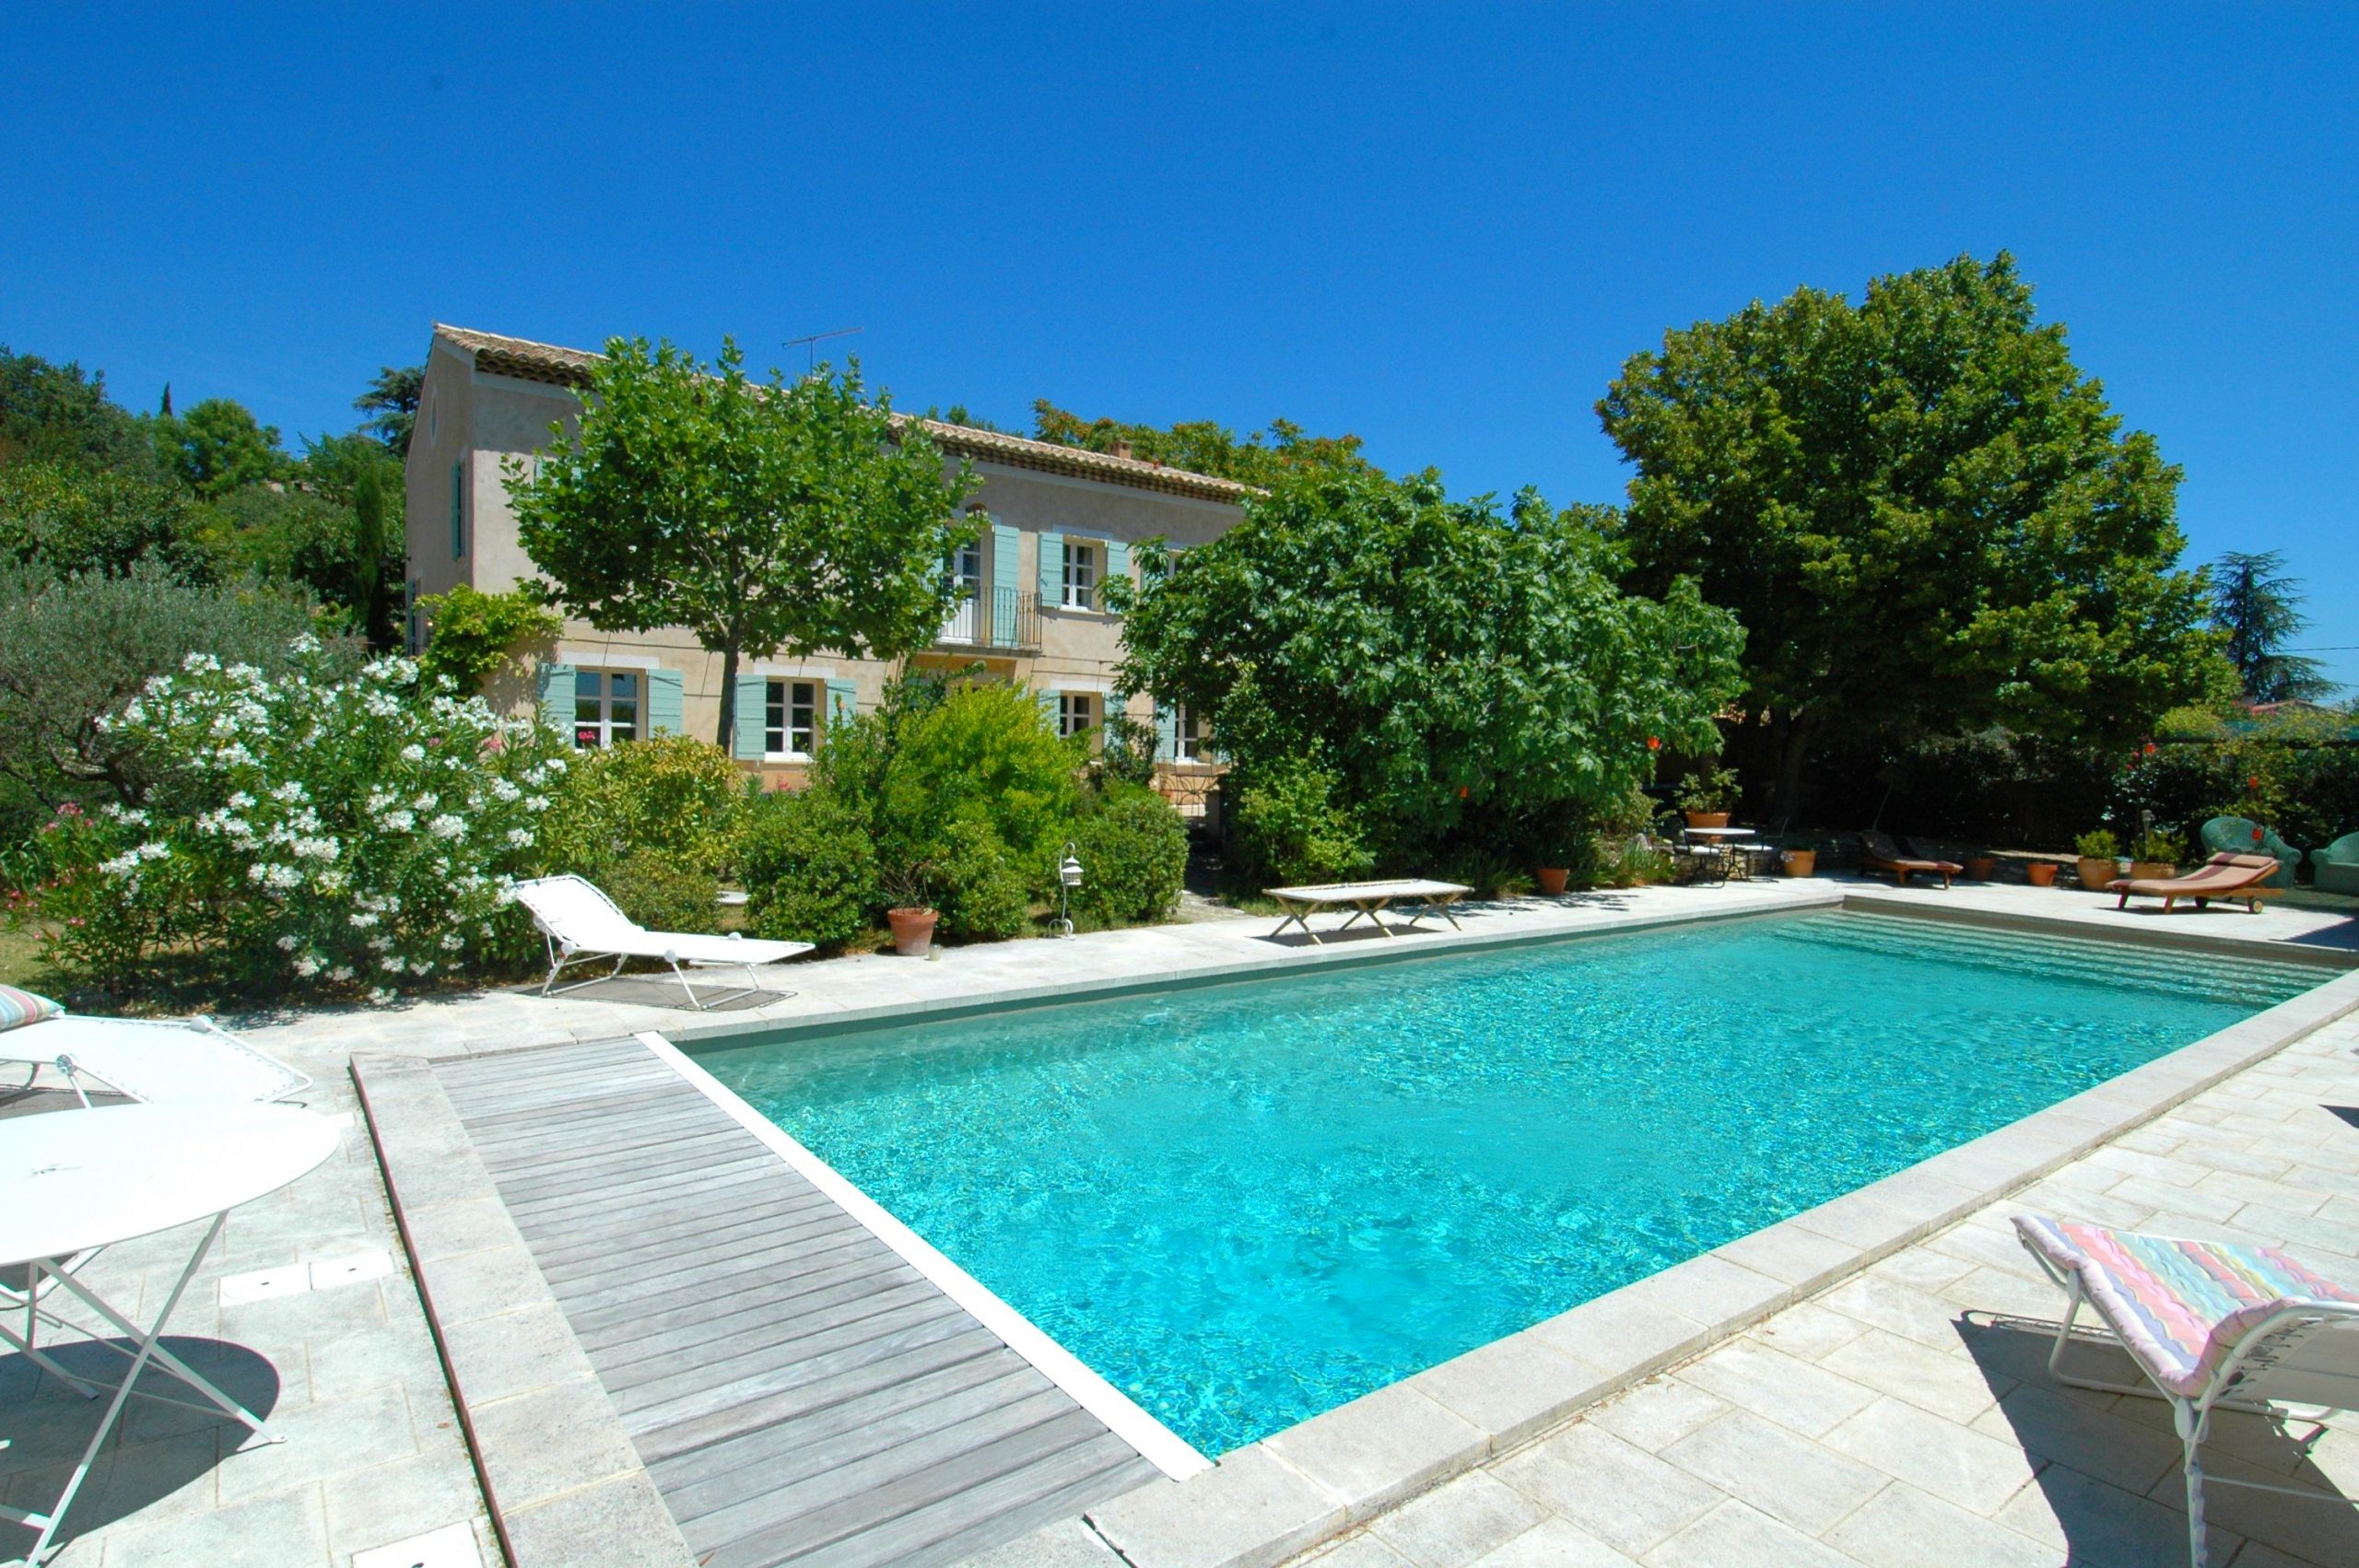 Provence Location Villa Luxe Luberon Avec Piscine Privee Chauffee avec Location Luberon Avec Piscine